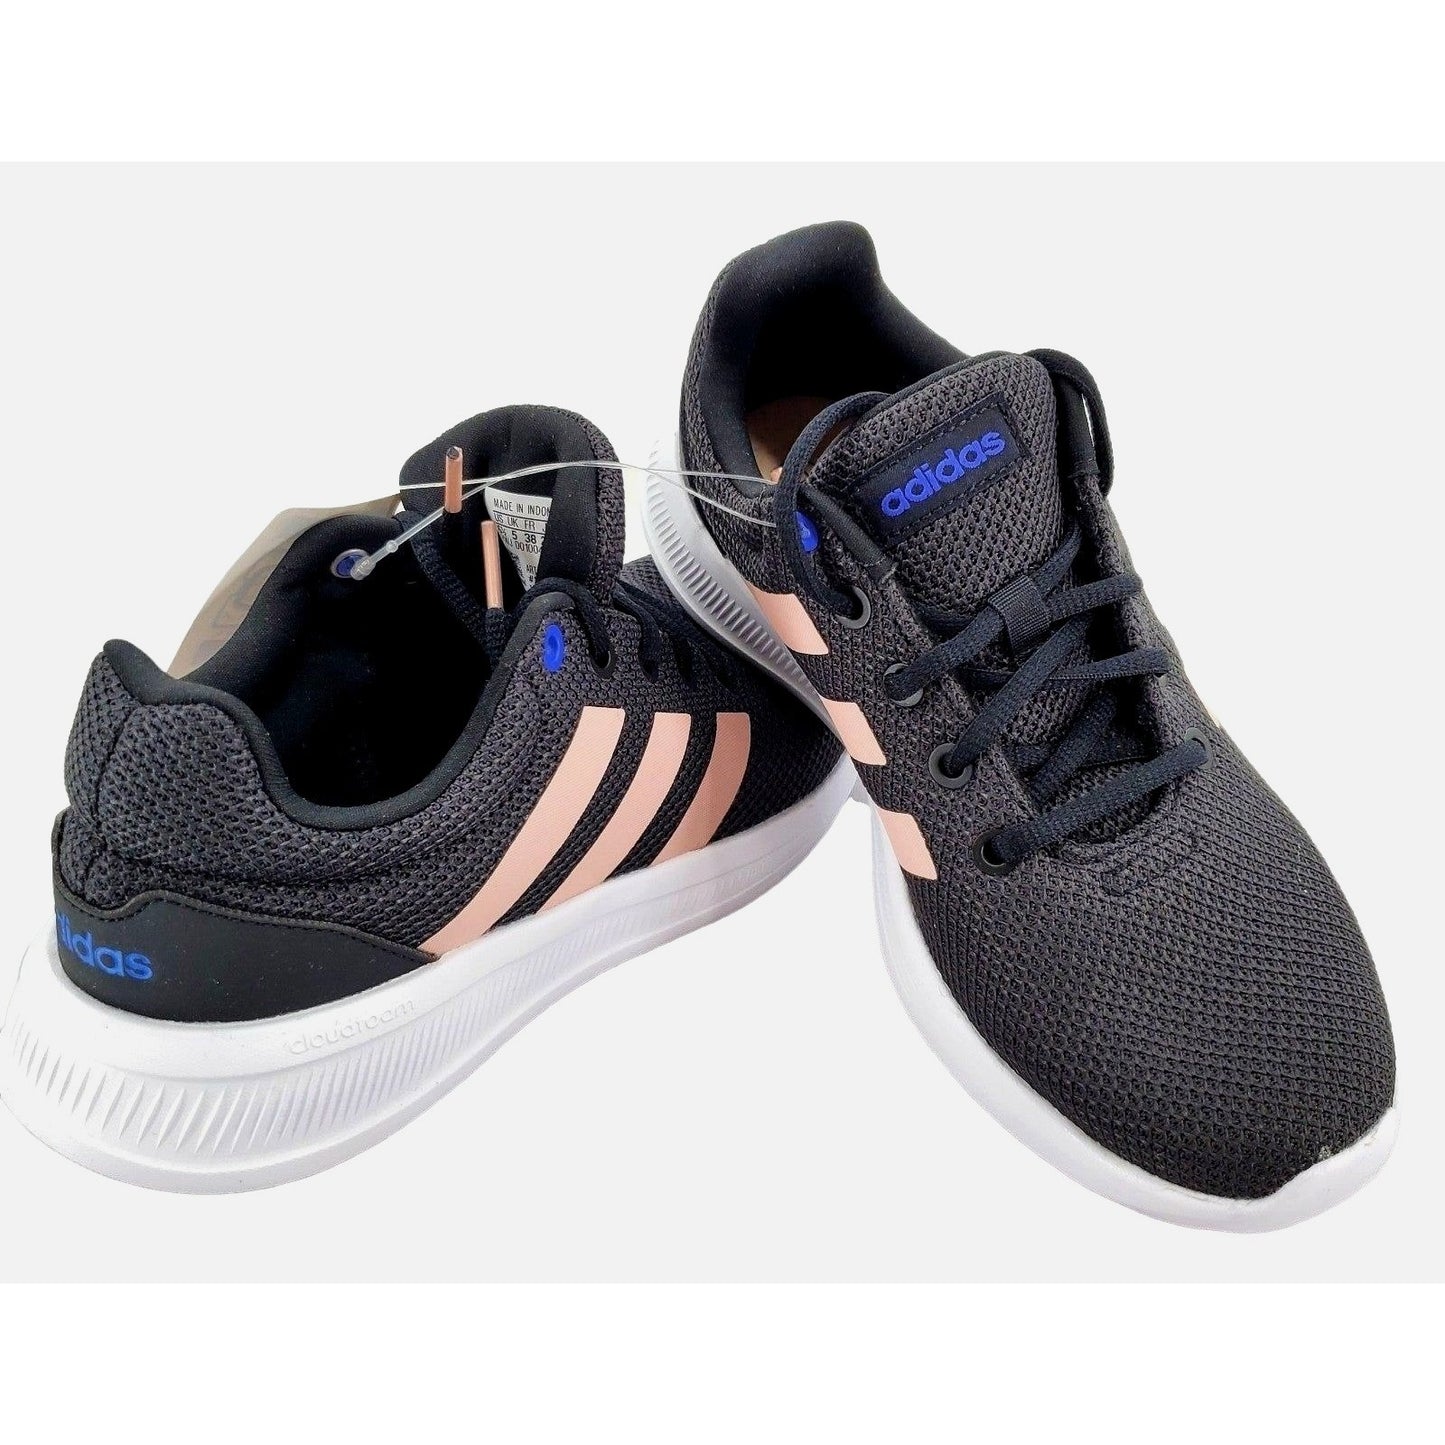 ADIDAS Sneakers Woman's Lite Racer CLN 2.0 Athletic Running Shoe Activewear